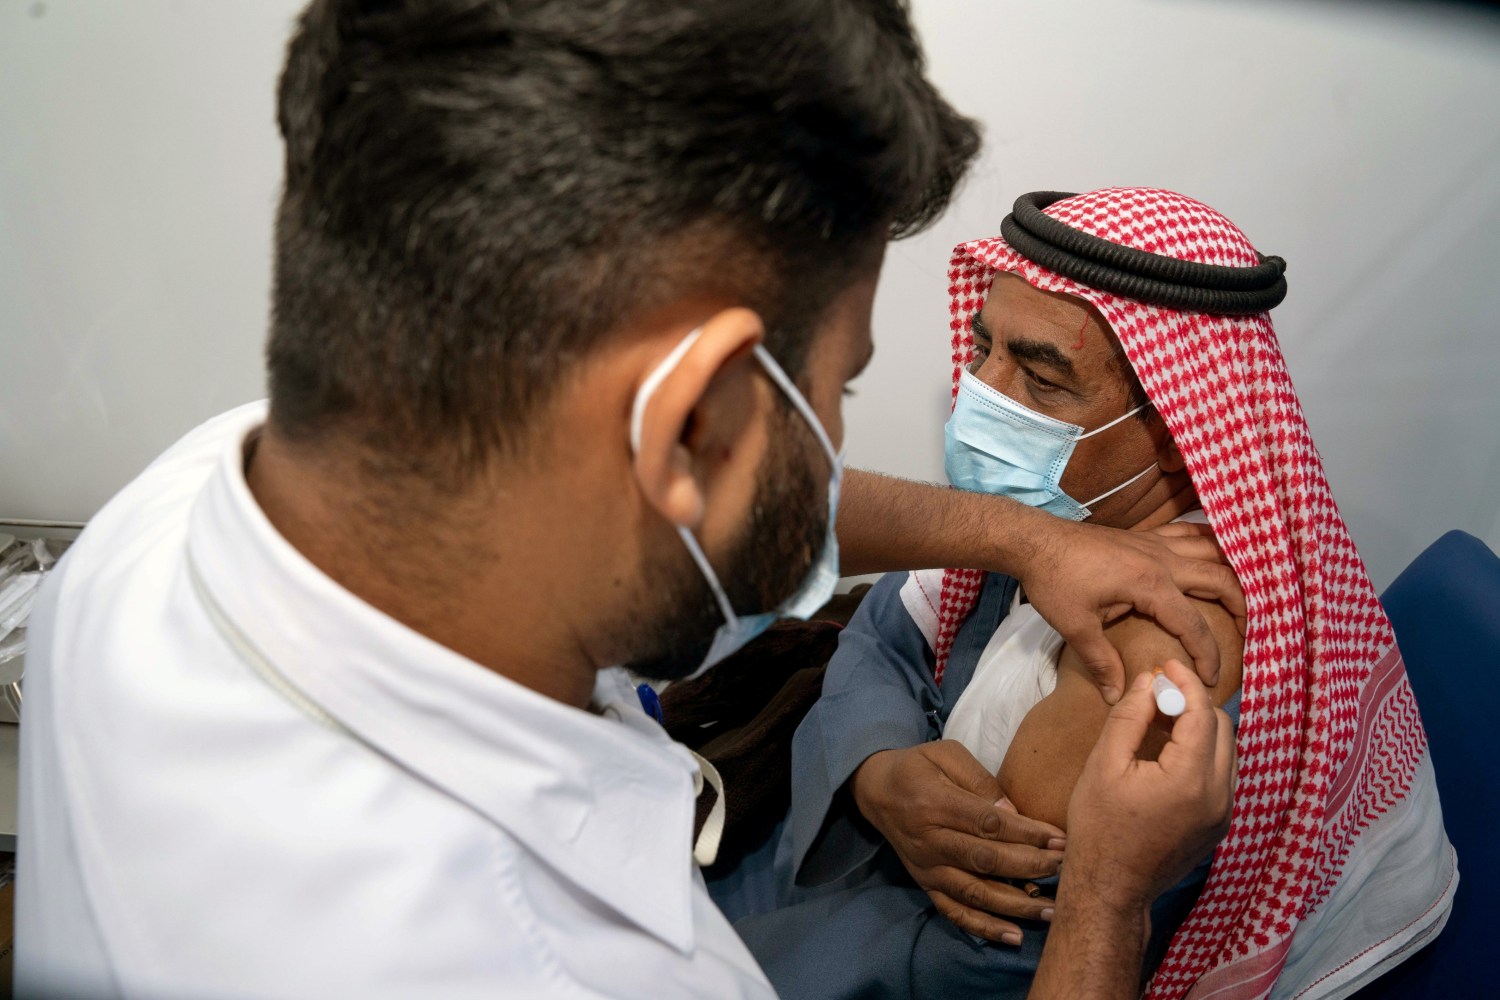 A Kuwaiti man, Abdulla al Anazi, gets a dose of a coronavirus disease (COVID-19) vaccine in Kuwait City, Kuwait December 24, 2020. REUTERS/Stephanie McGehee